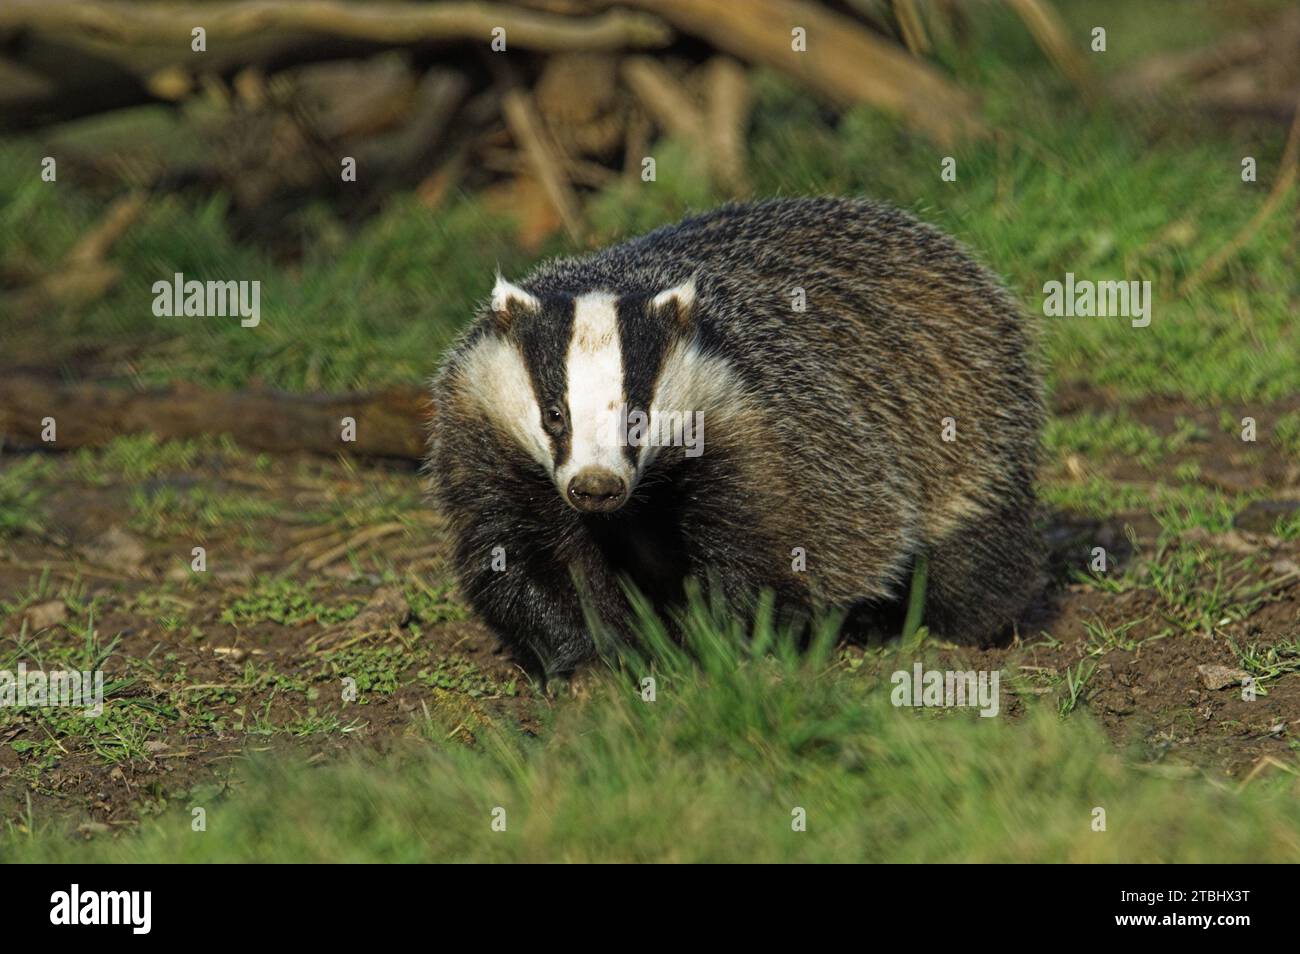 European Badger (Meles meles) Adult above ground during evening light. Stock Photo